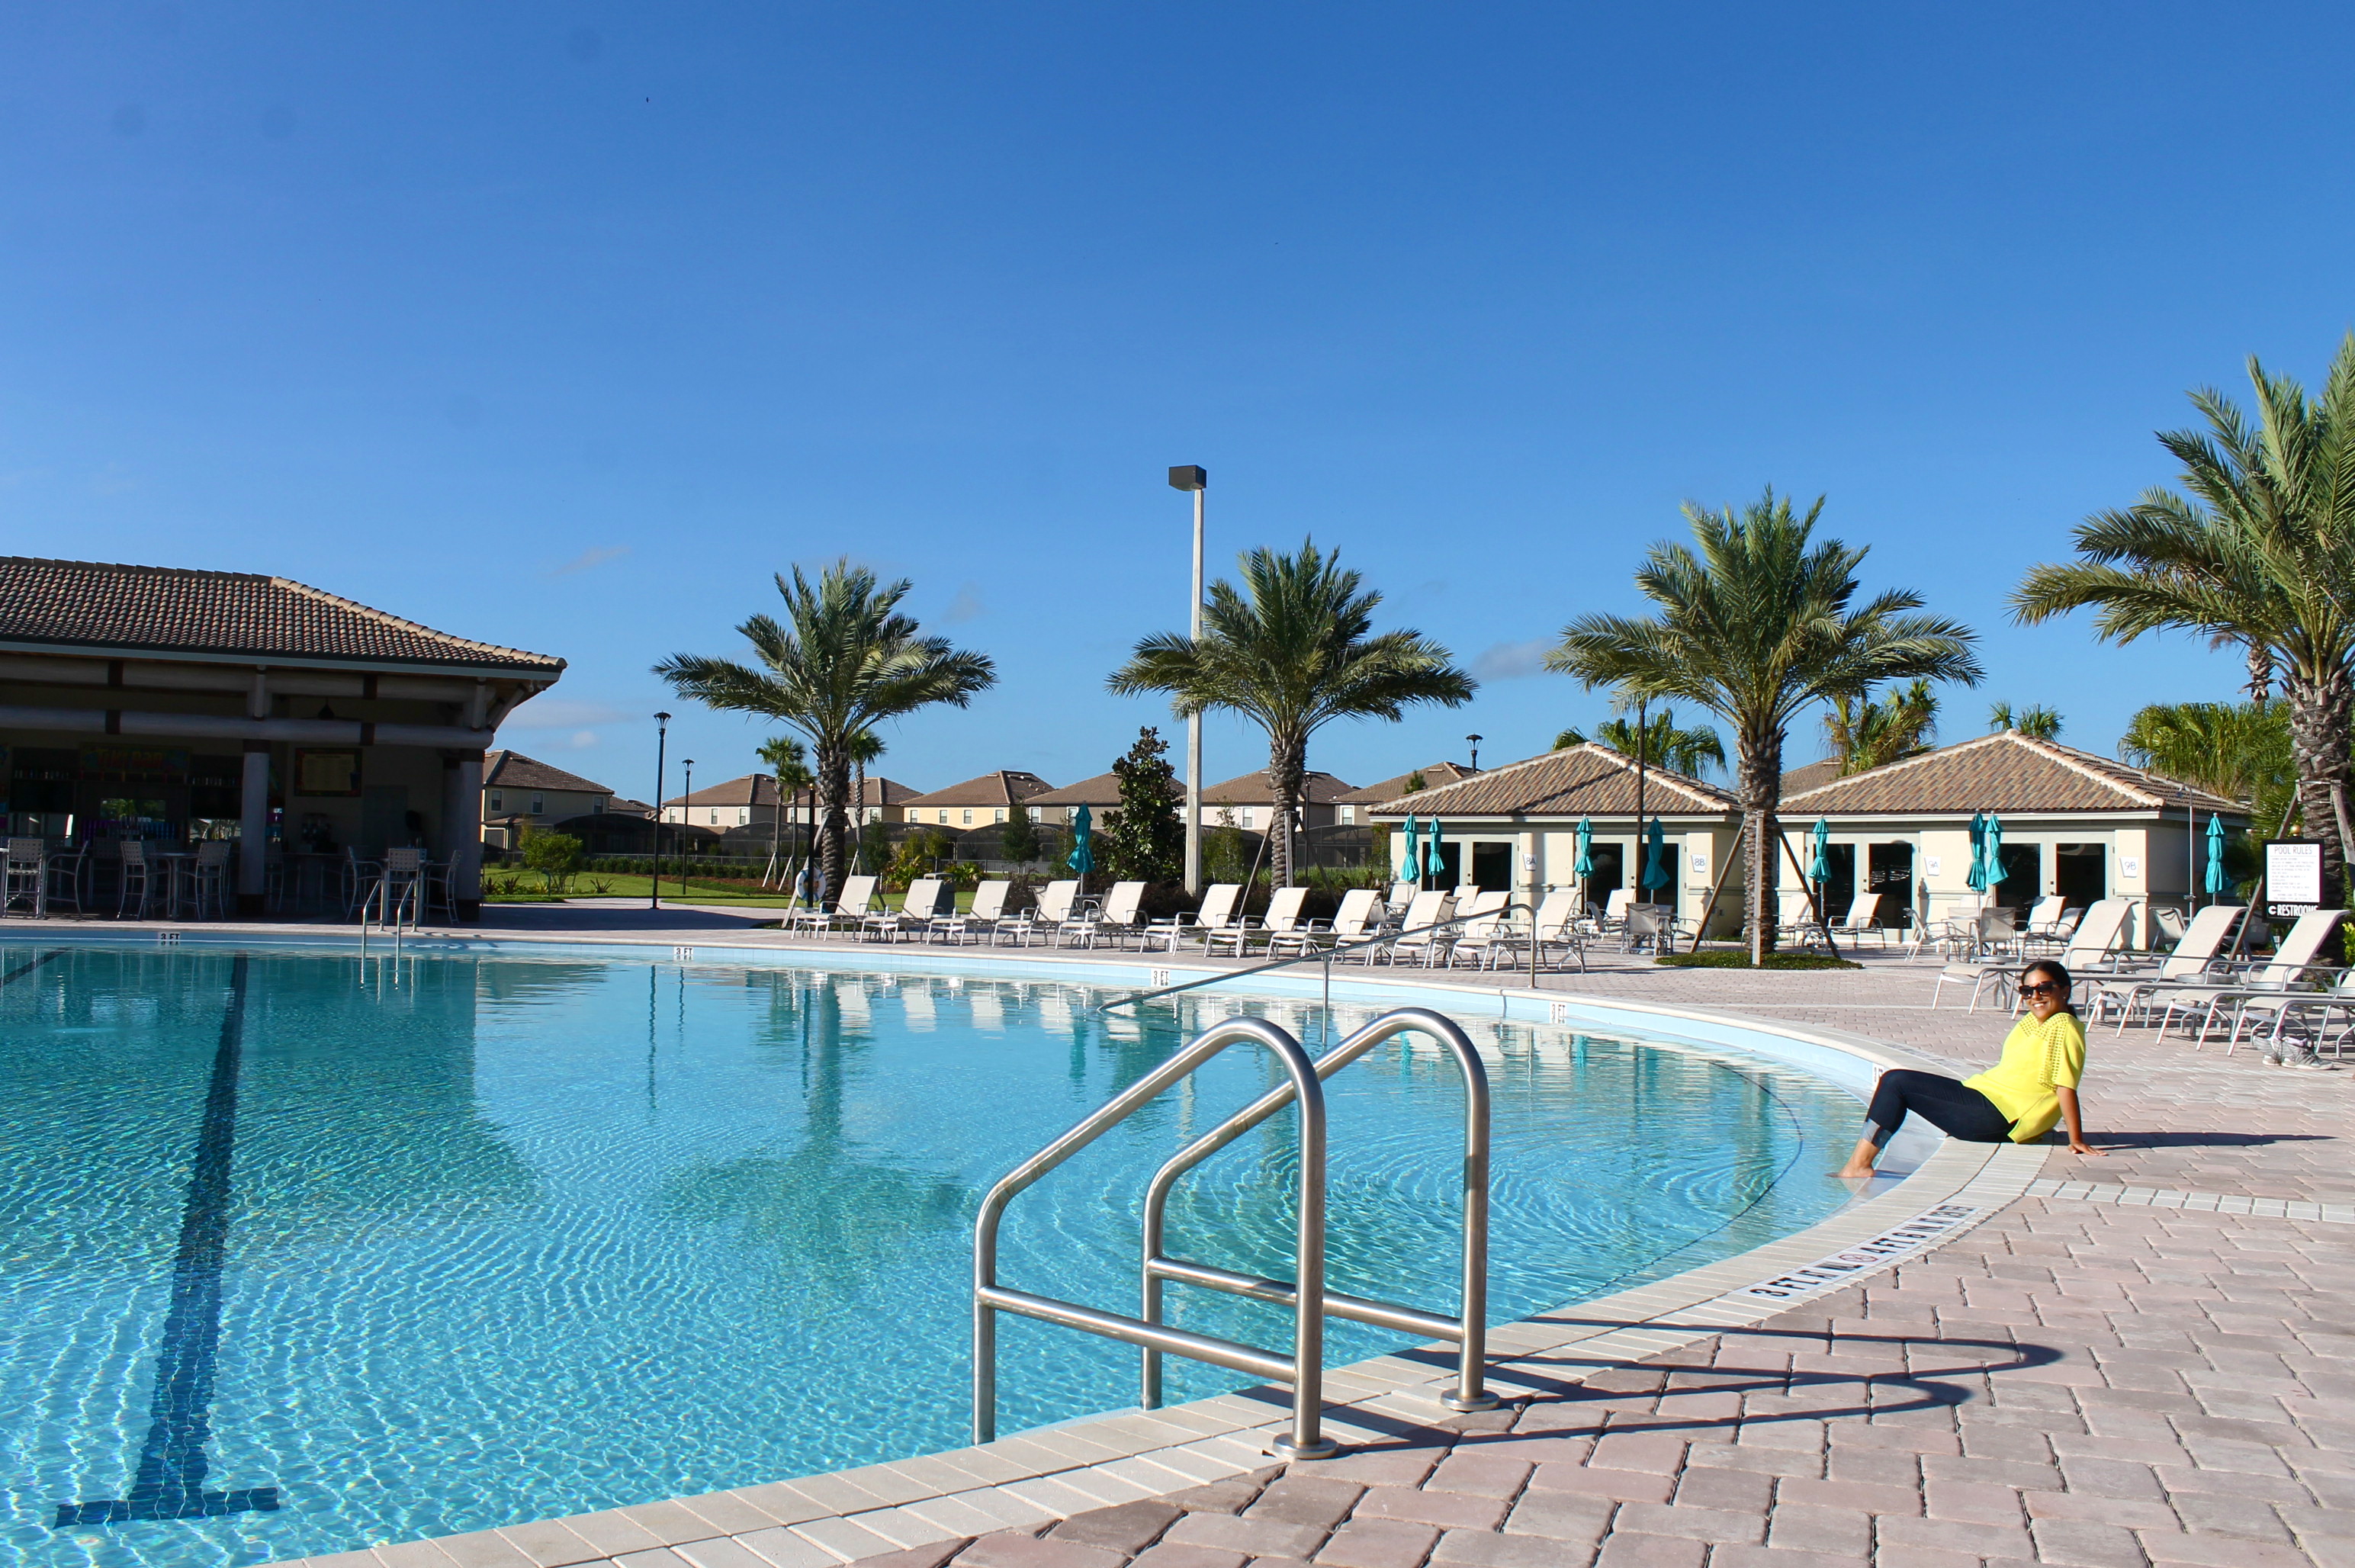 Champions Gate Resort, kissimmee, vacation home, florida, global vacation homes